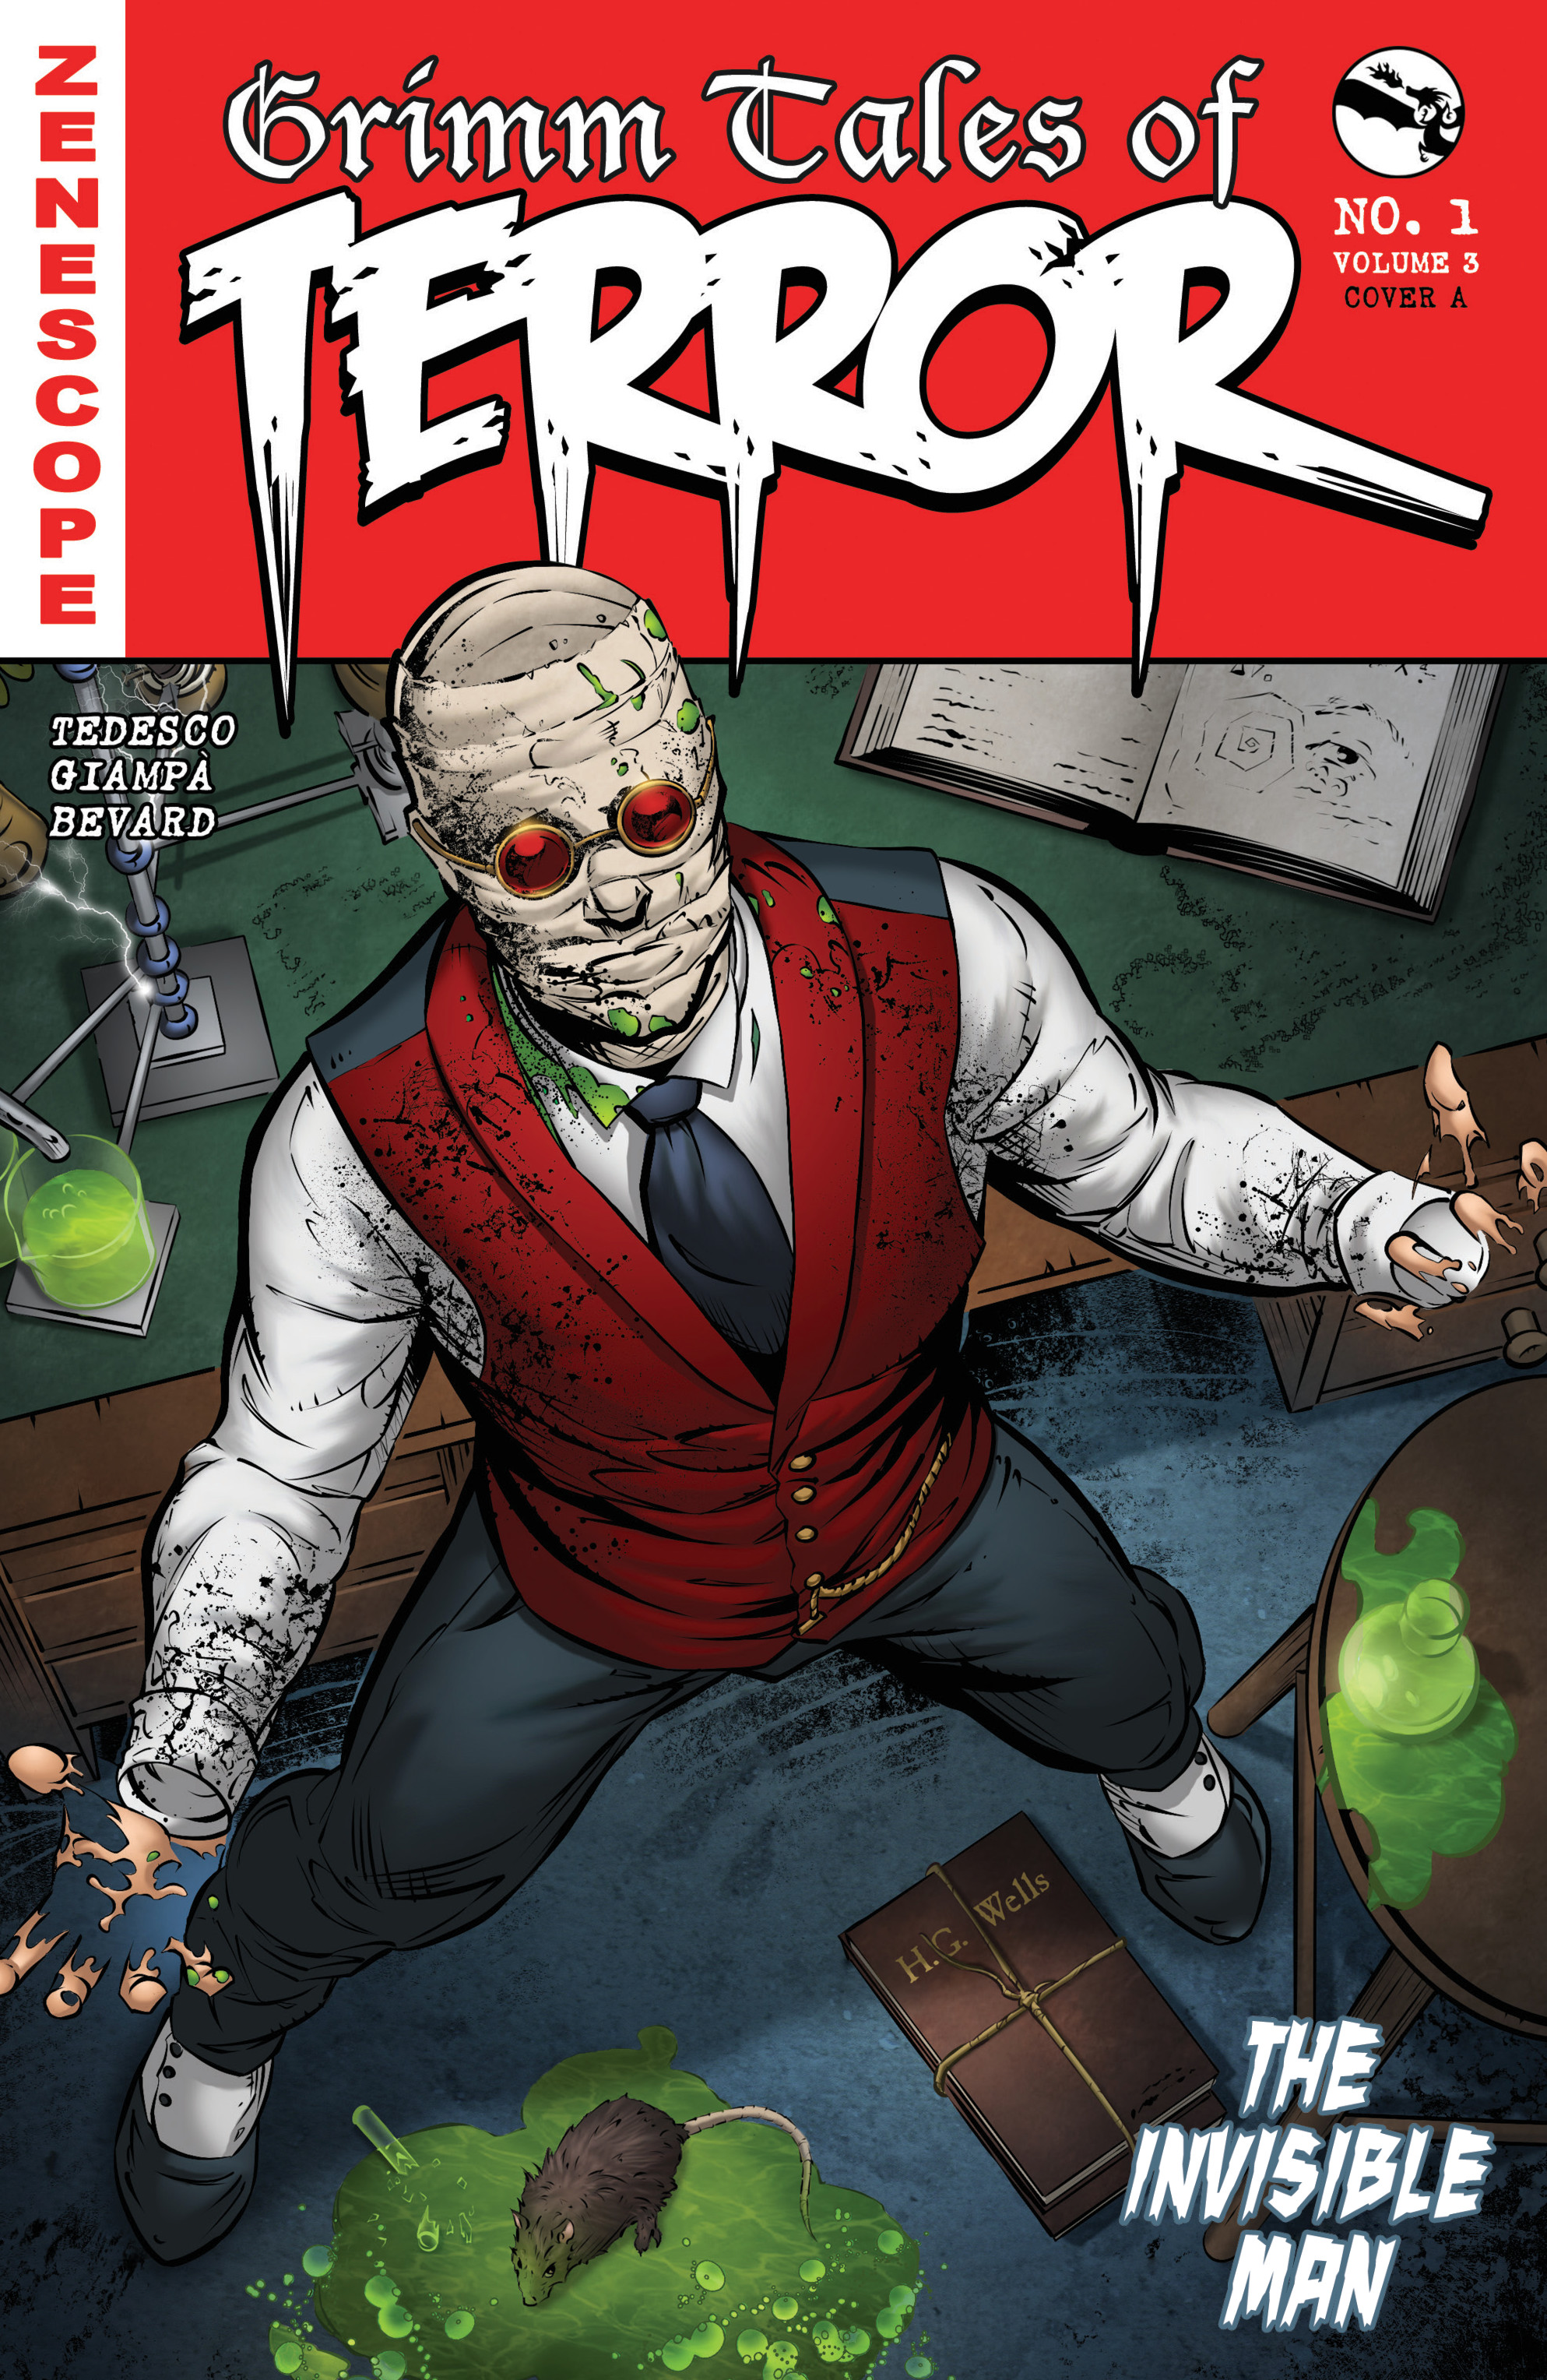 Read online Grimm Tales of Terror: Vol. 3 comic -  Issue #1 - 1